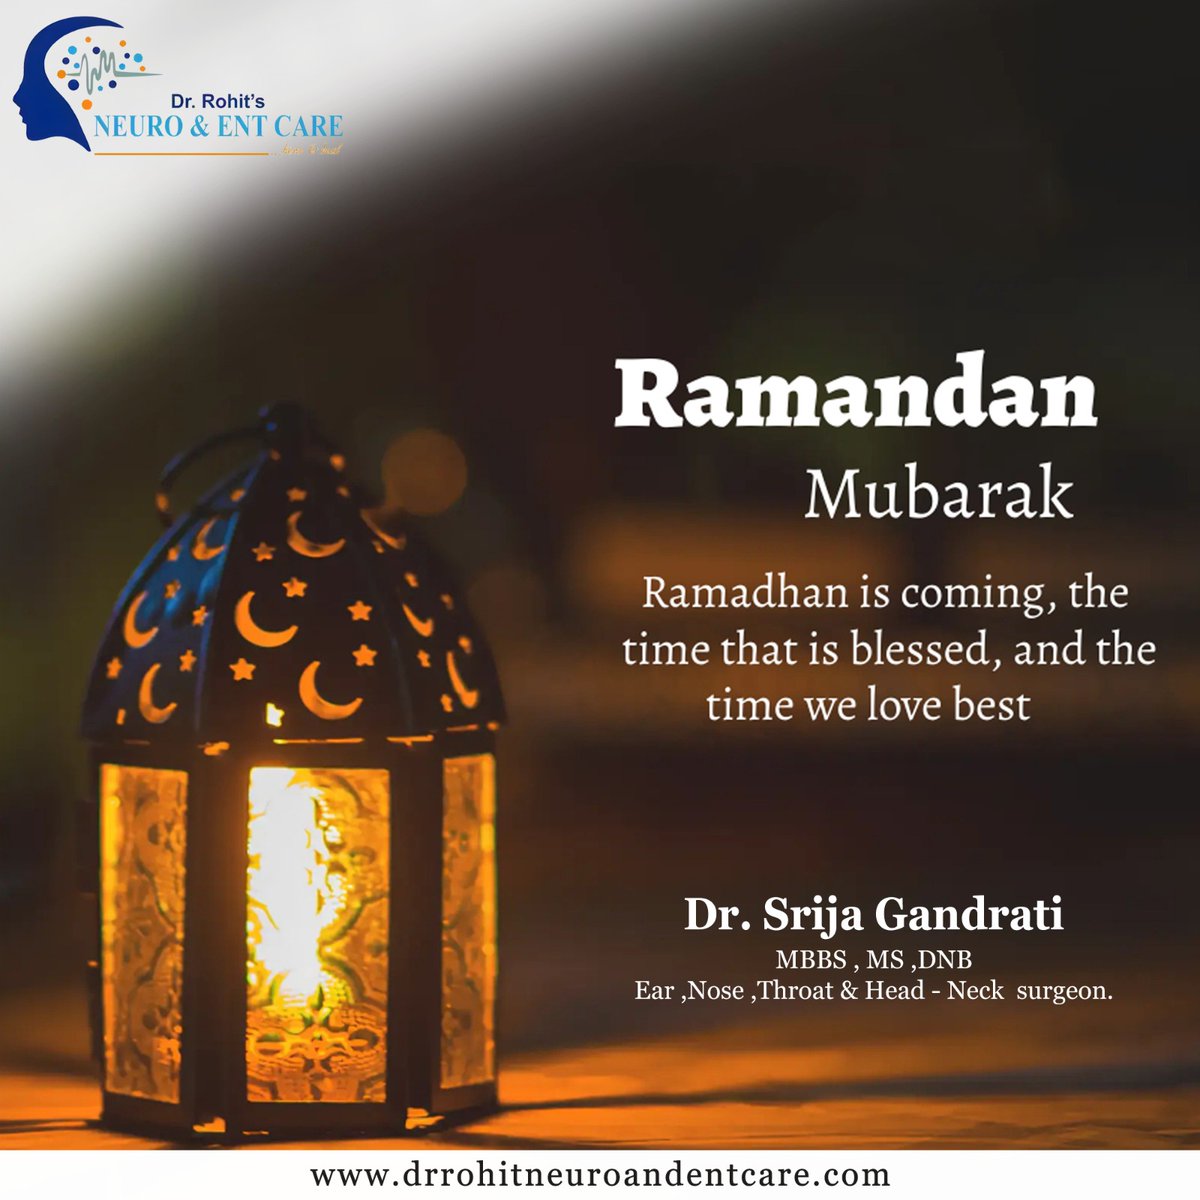 'May this Ramadan bring joy, health, and wealth to you. Ramadan Mubarak!'

#RamadanMubarak #RamadanKareem #BlessingsOfRamadan #FastingAndPrayer #RamadanSpirit #Holymonth #IslamicTradition #PeaceAndHarmony #MonthOfMercy #RamadanReflections #RamadanVibes #IftarGathering